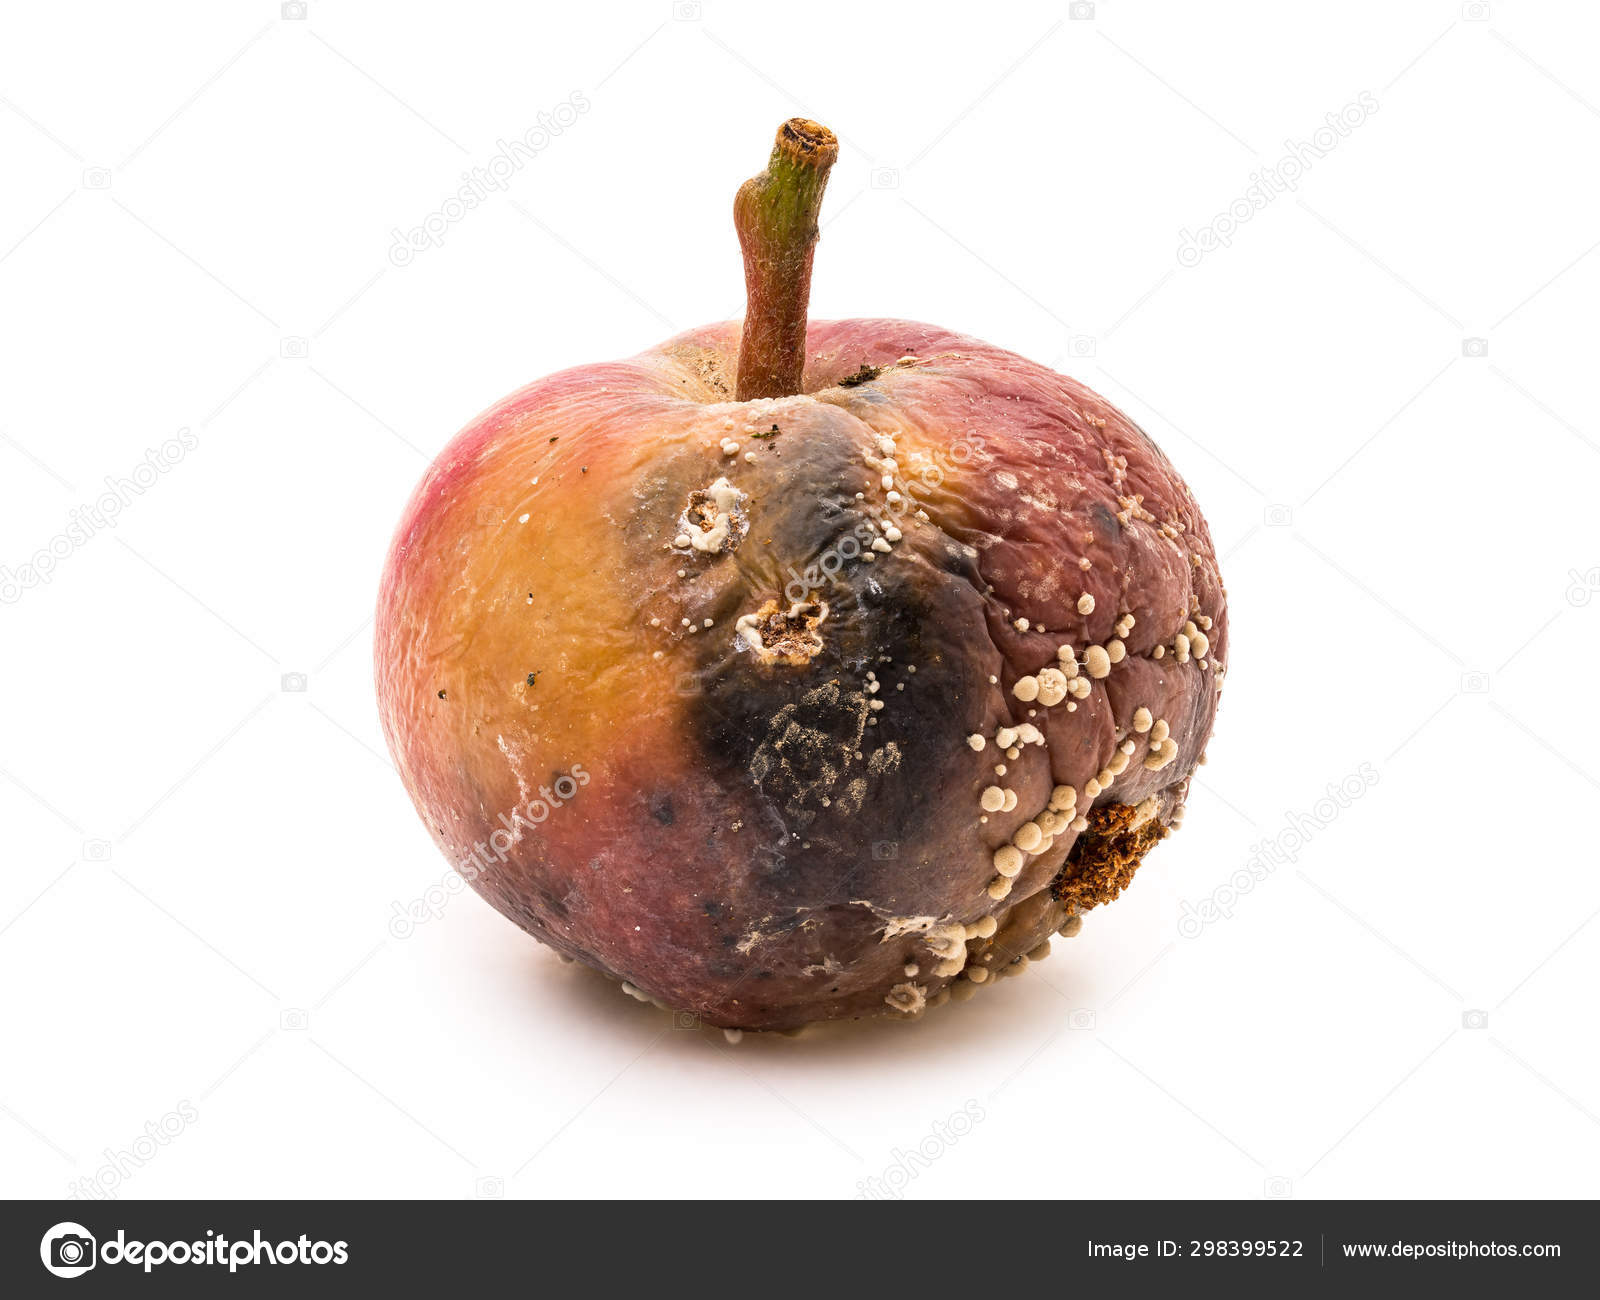 rotten-apple.jpg